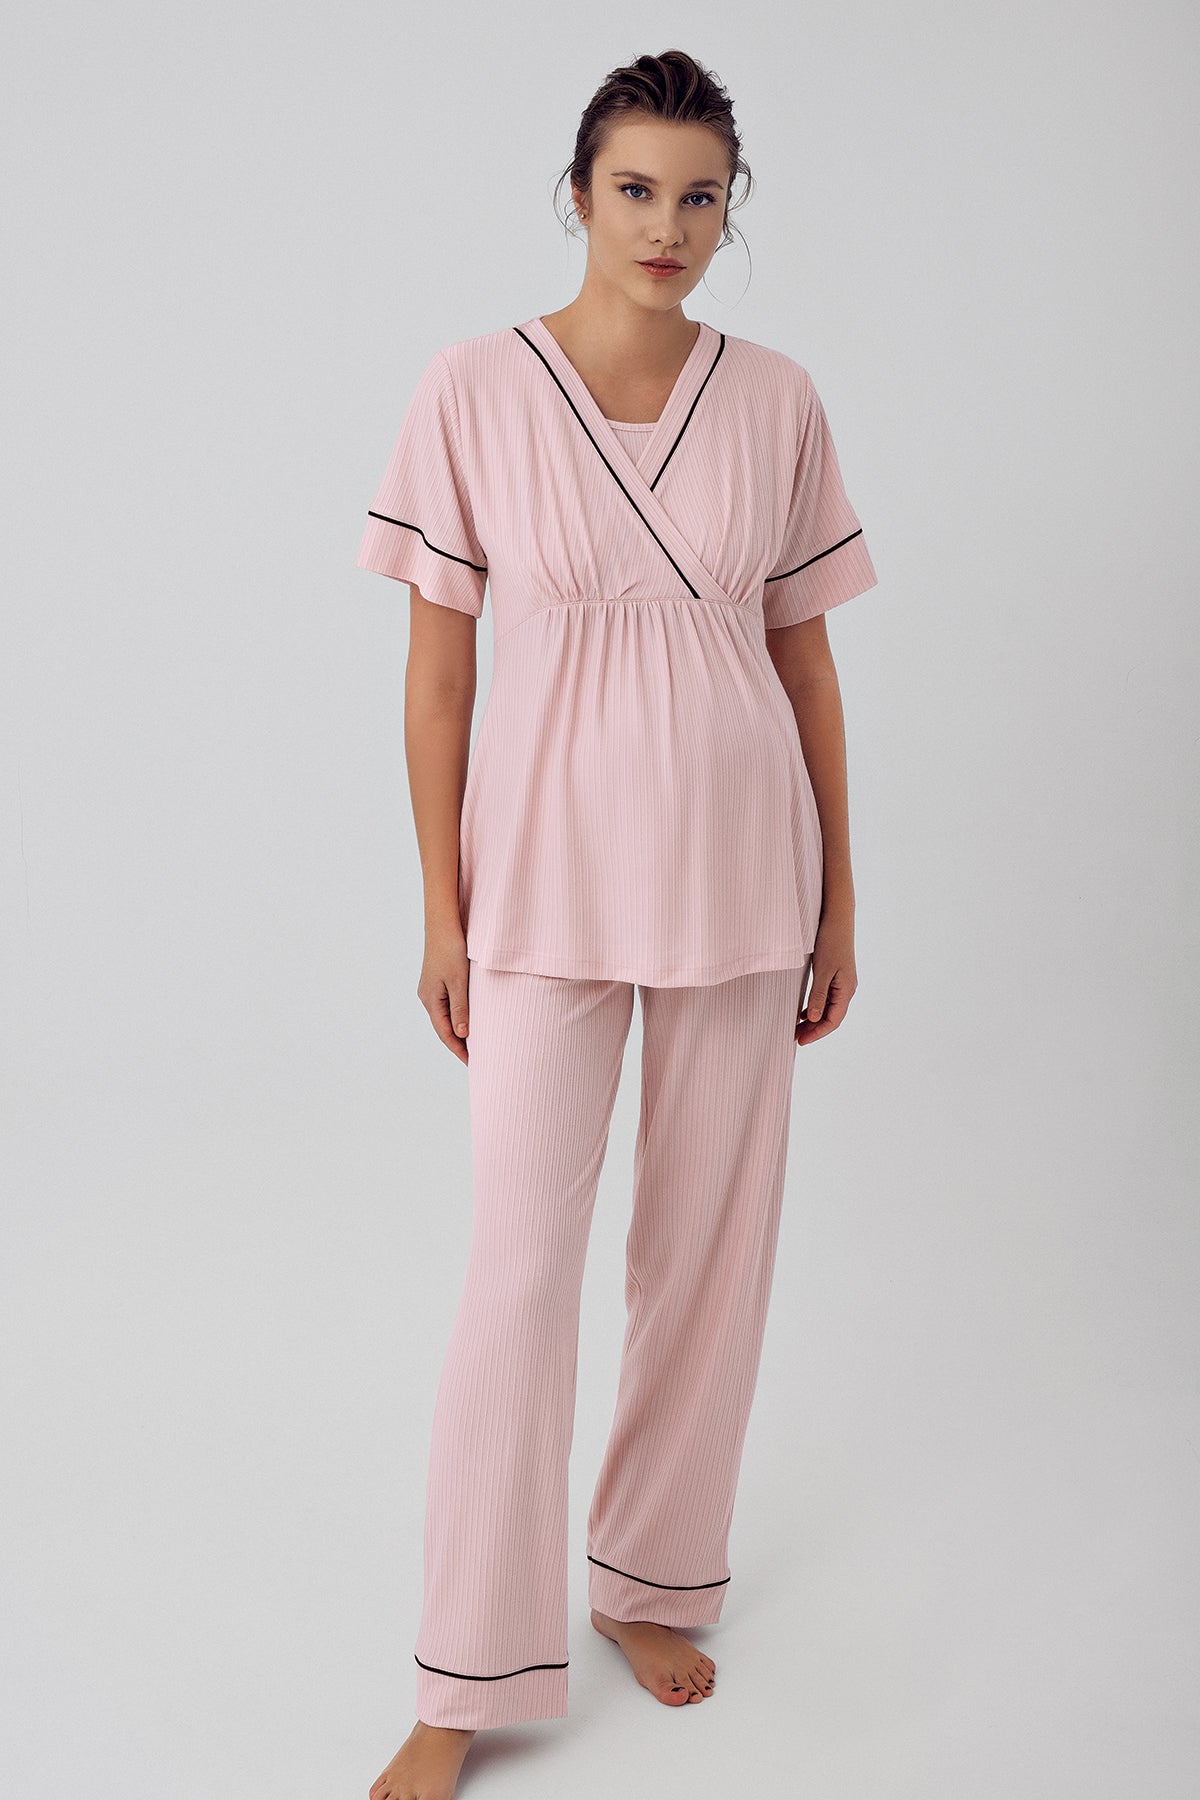 Shopymommy 16202 Double Breasted Maternity & Nursing Pajamas Pink